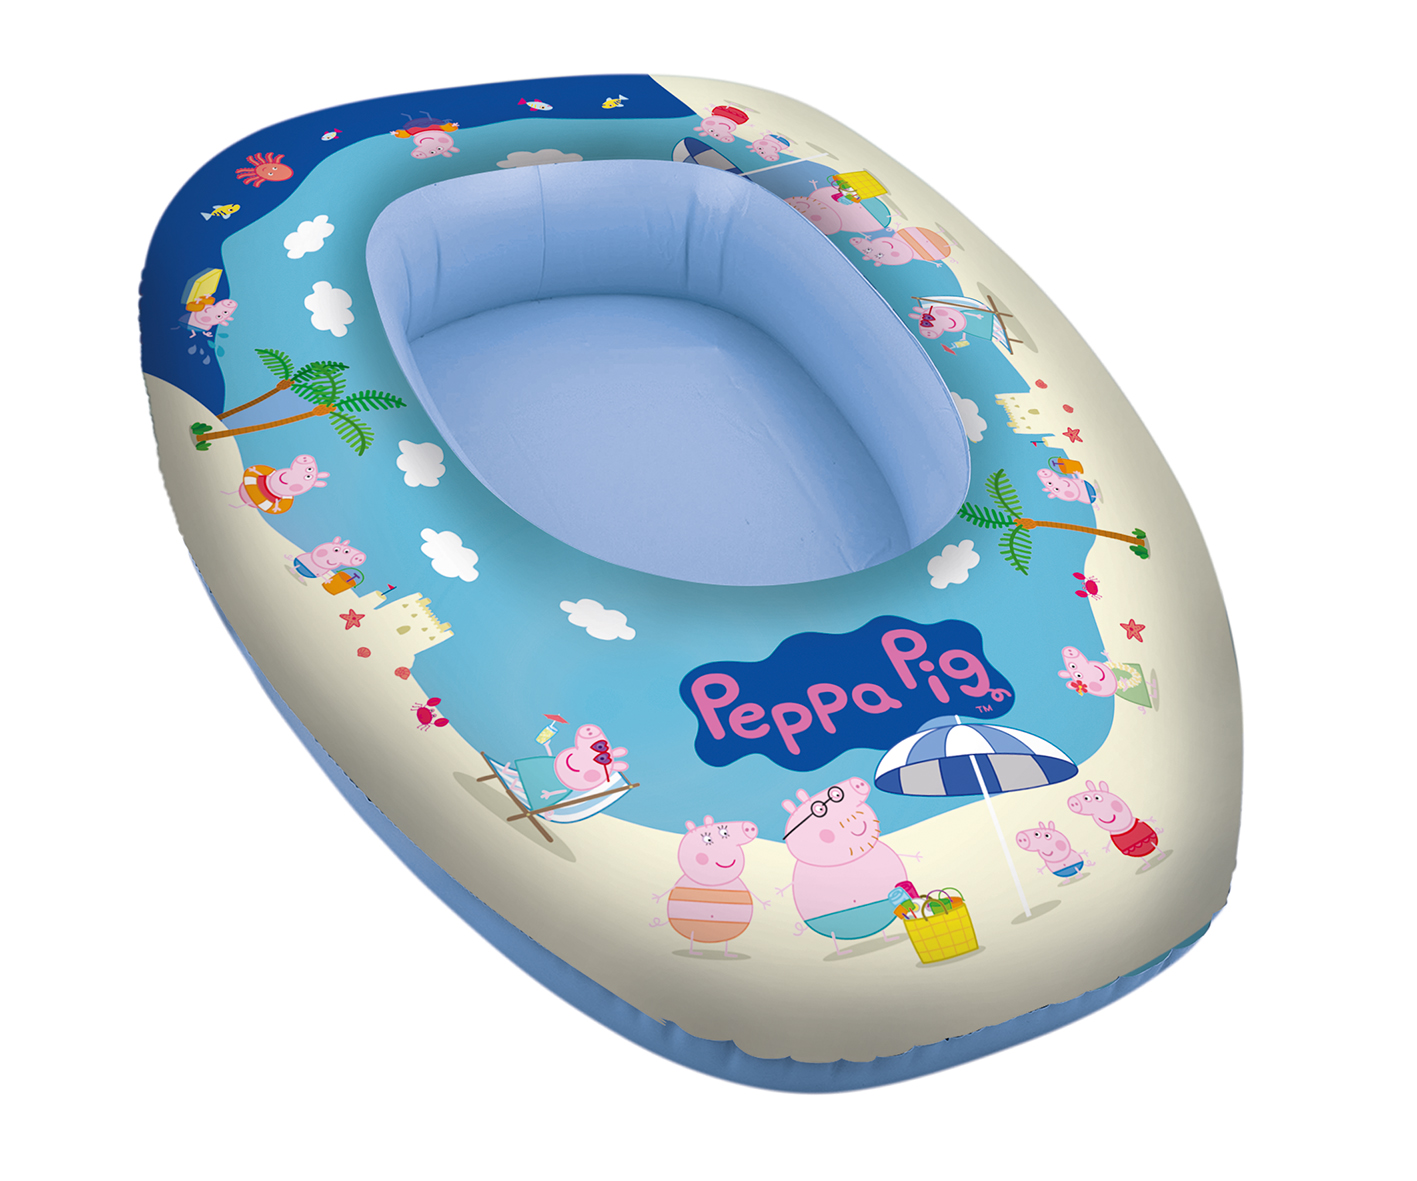 Happy People Peppa Pig Kinderboot, 80 x 54 x 22 cm